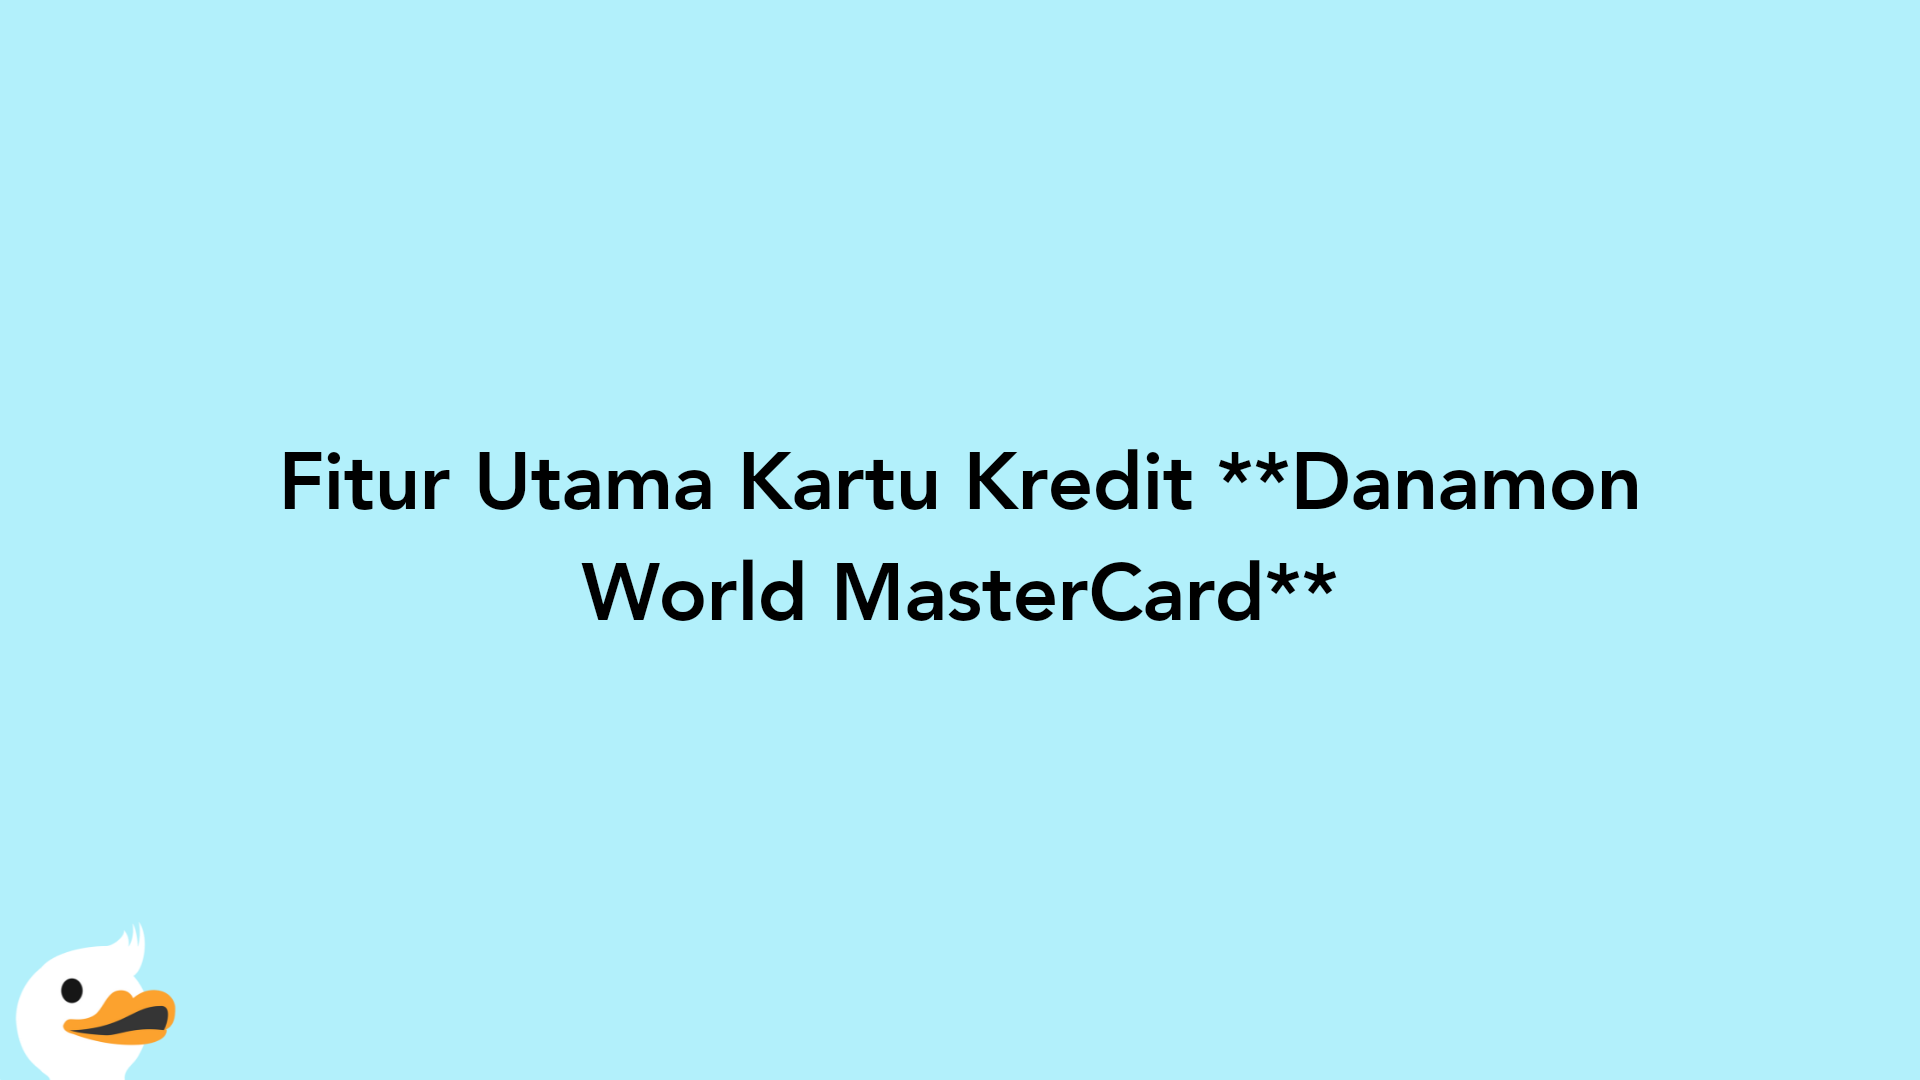 Fitur Utama Kartu Kredit Danamon World MasterCard